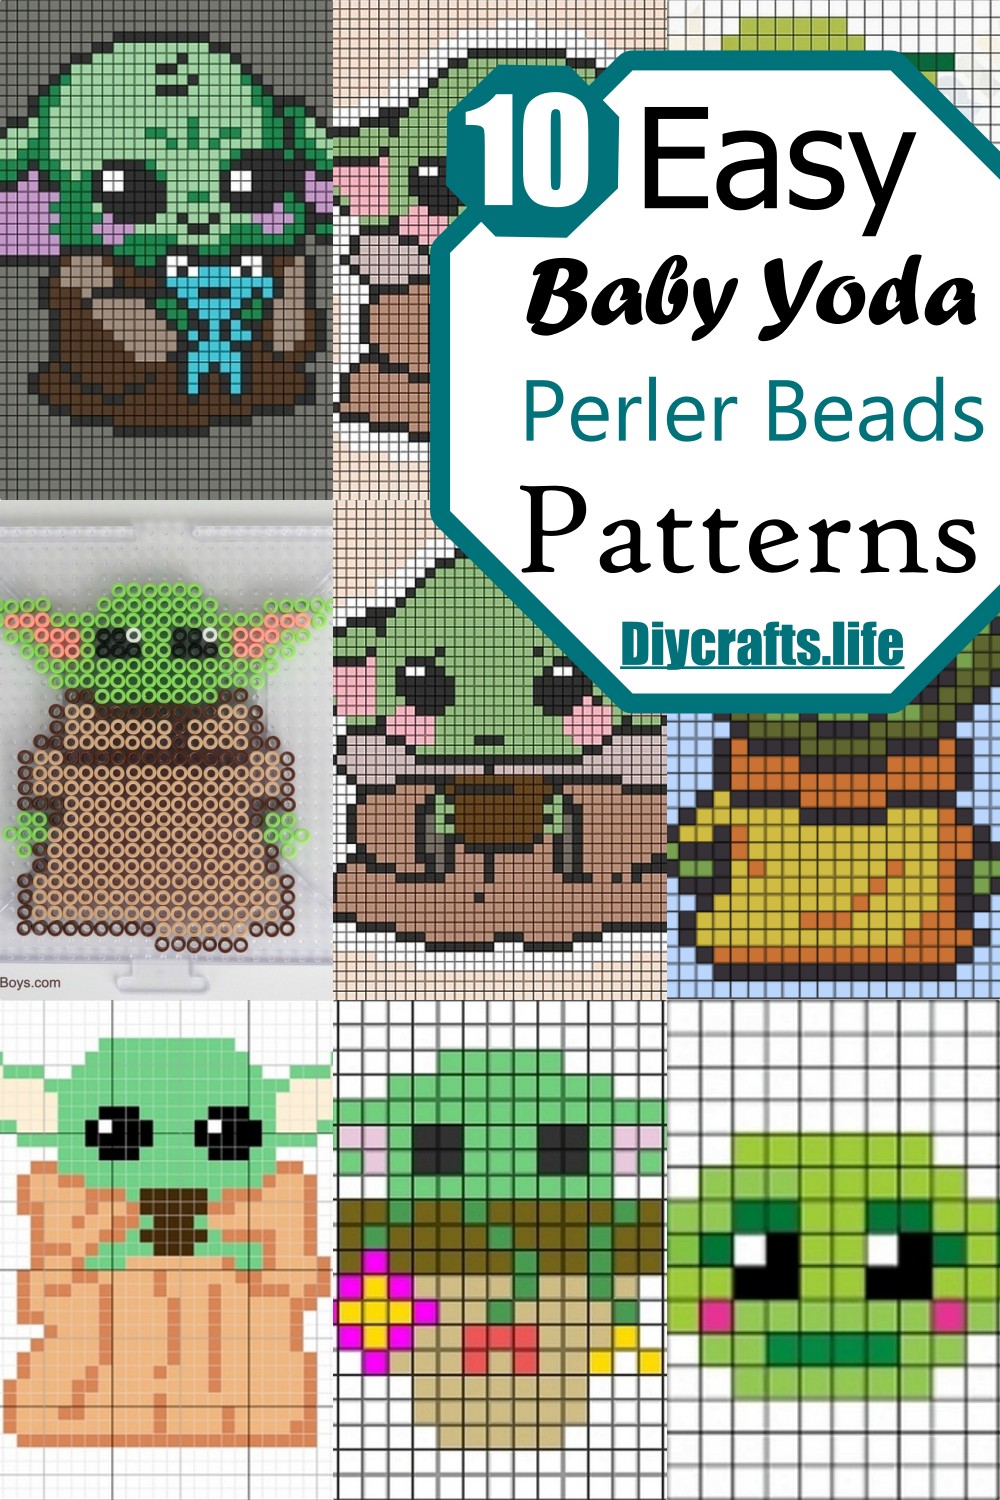 Easy Baby Yoda Perler Beads Patterns